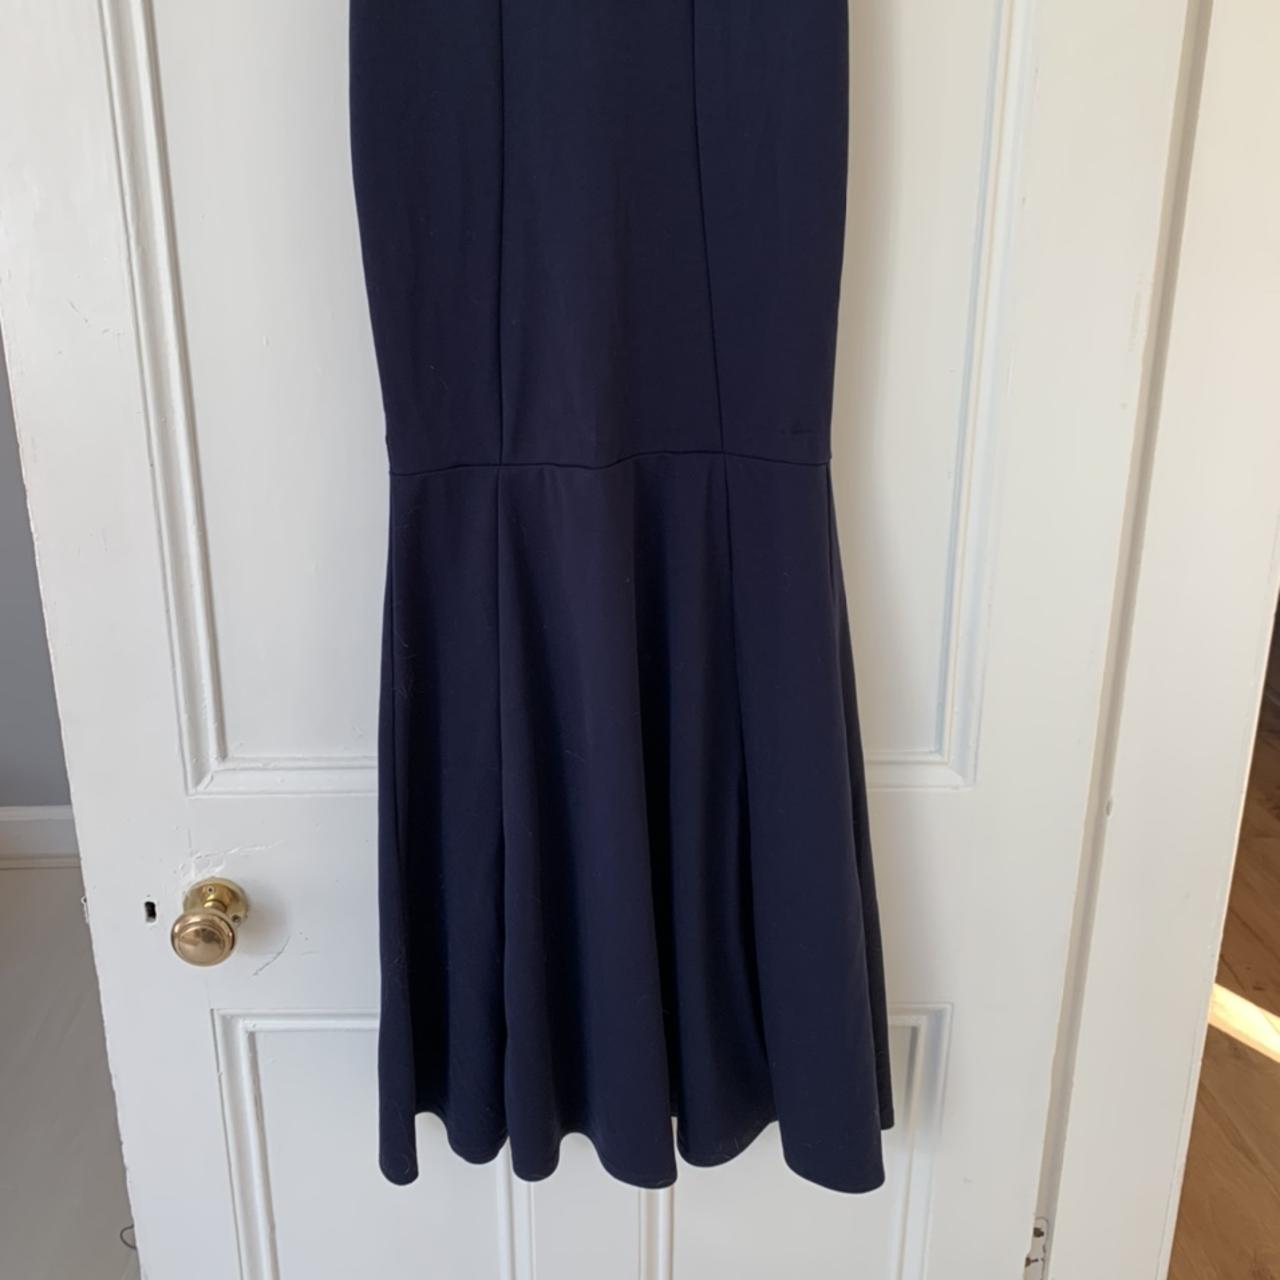 Missguided Women's Blue and Navy Dress | Depop